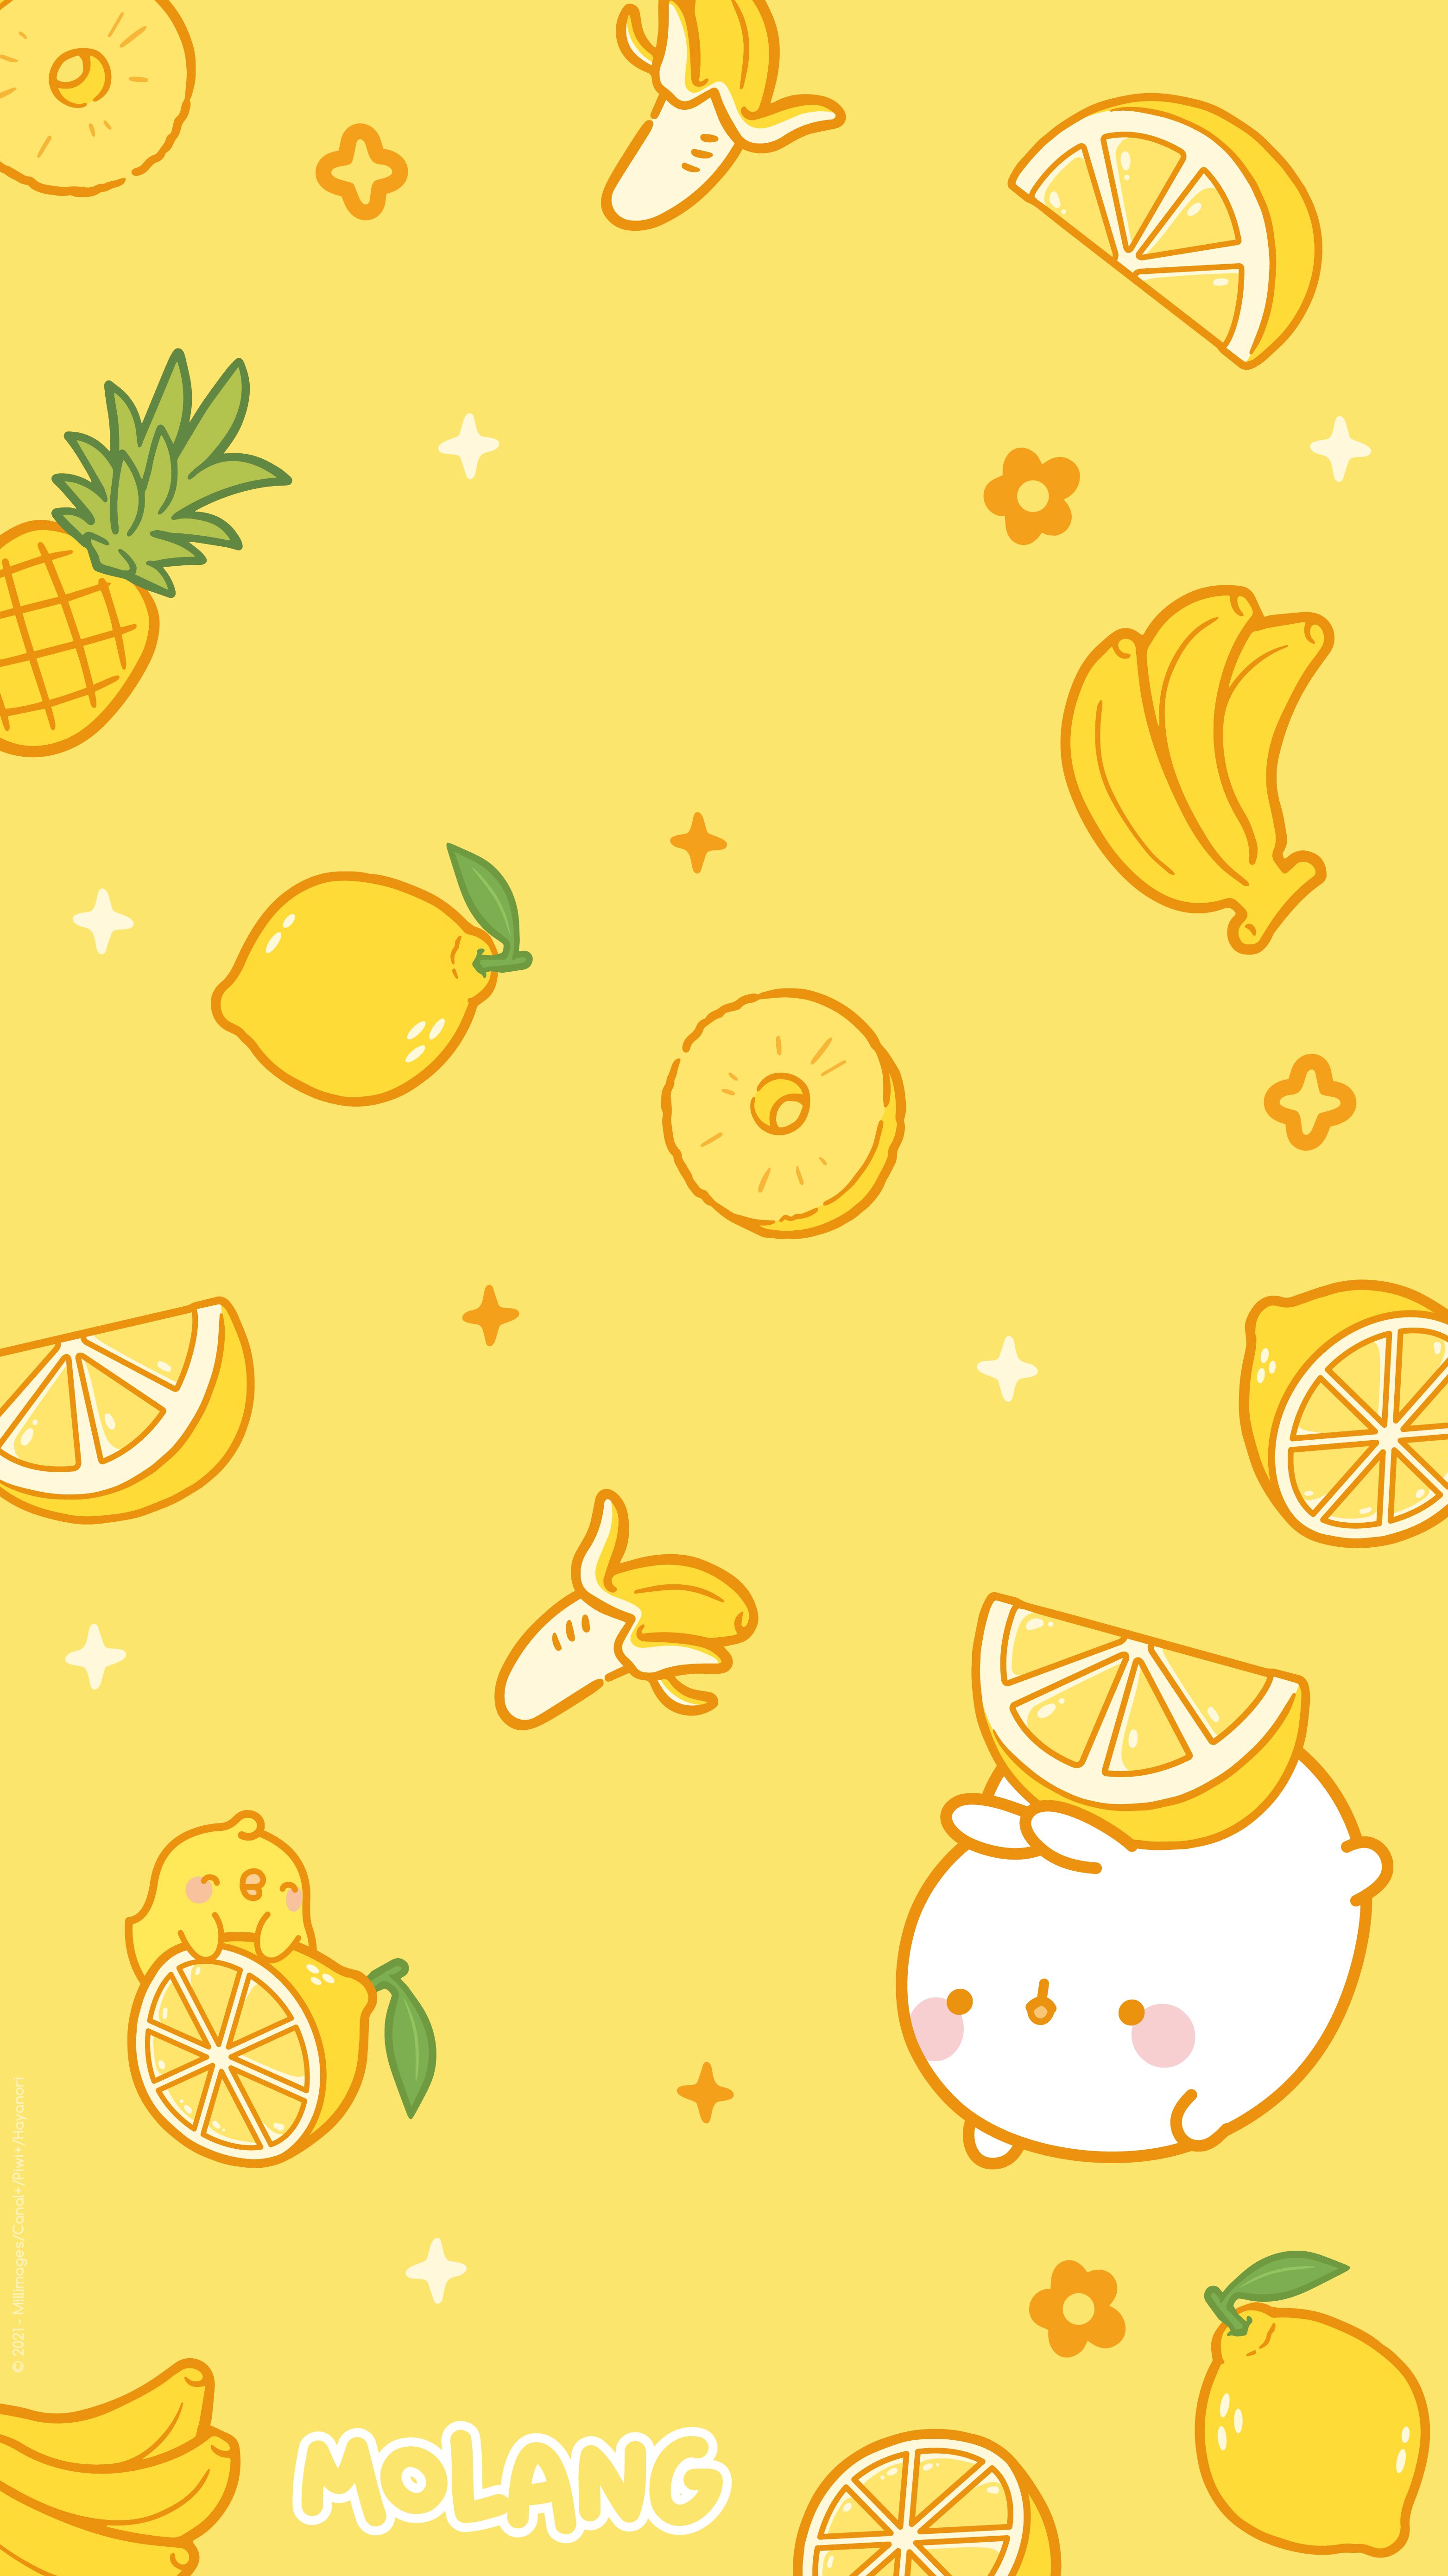 Molang 1 Wallpaper. Molang wallpaper, iPhone wallpaper yellow, Cute patterns wallpaper